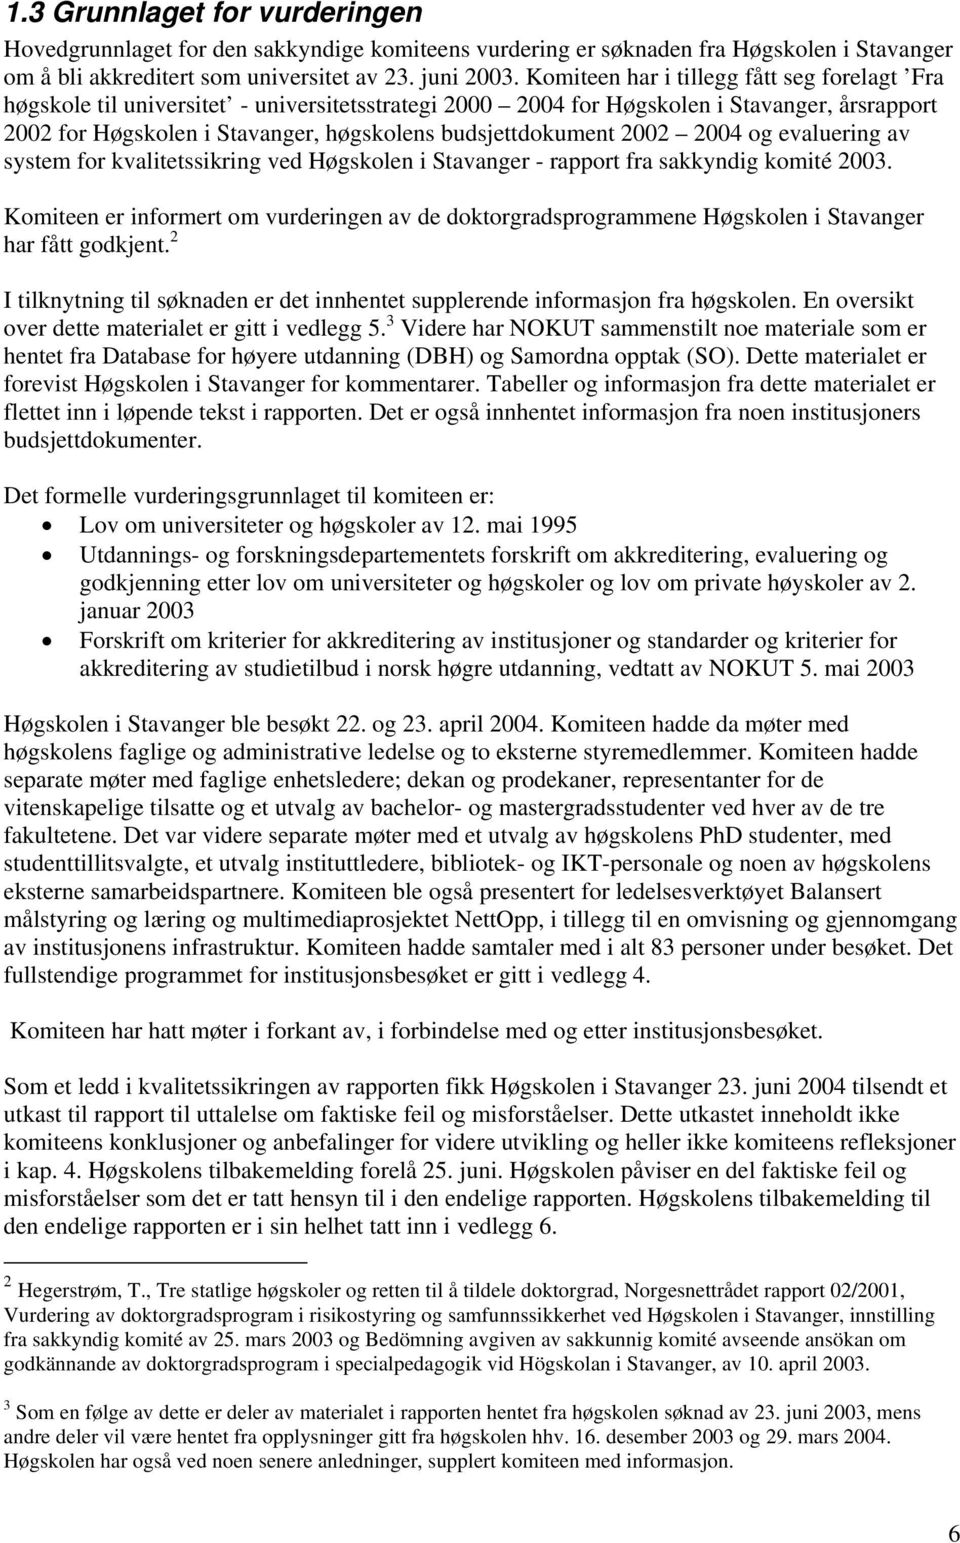 budsjettdokument 2002 2004 og evaluering av system for kvalitetssikring ved Høgskolen i Stavanger - rapport fra sakkyndig komité 2003.